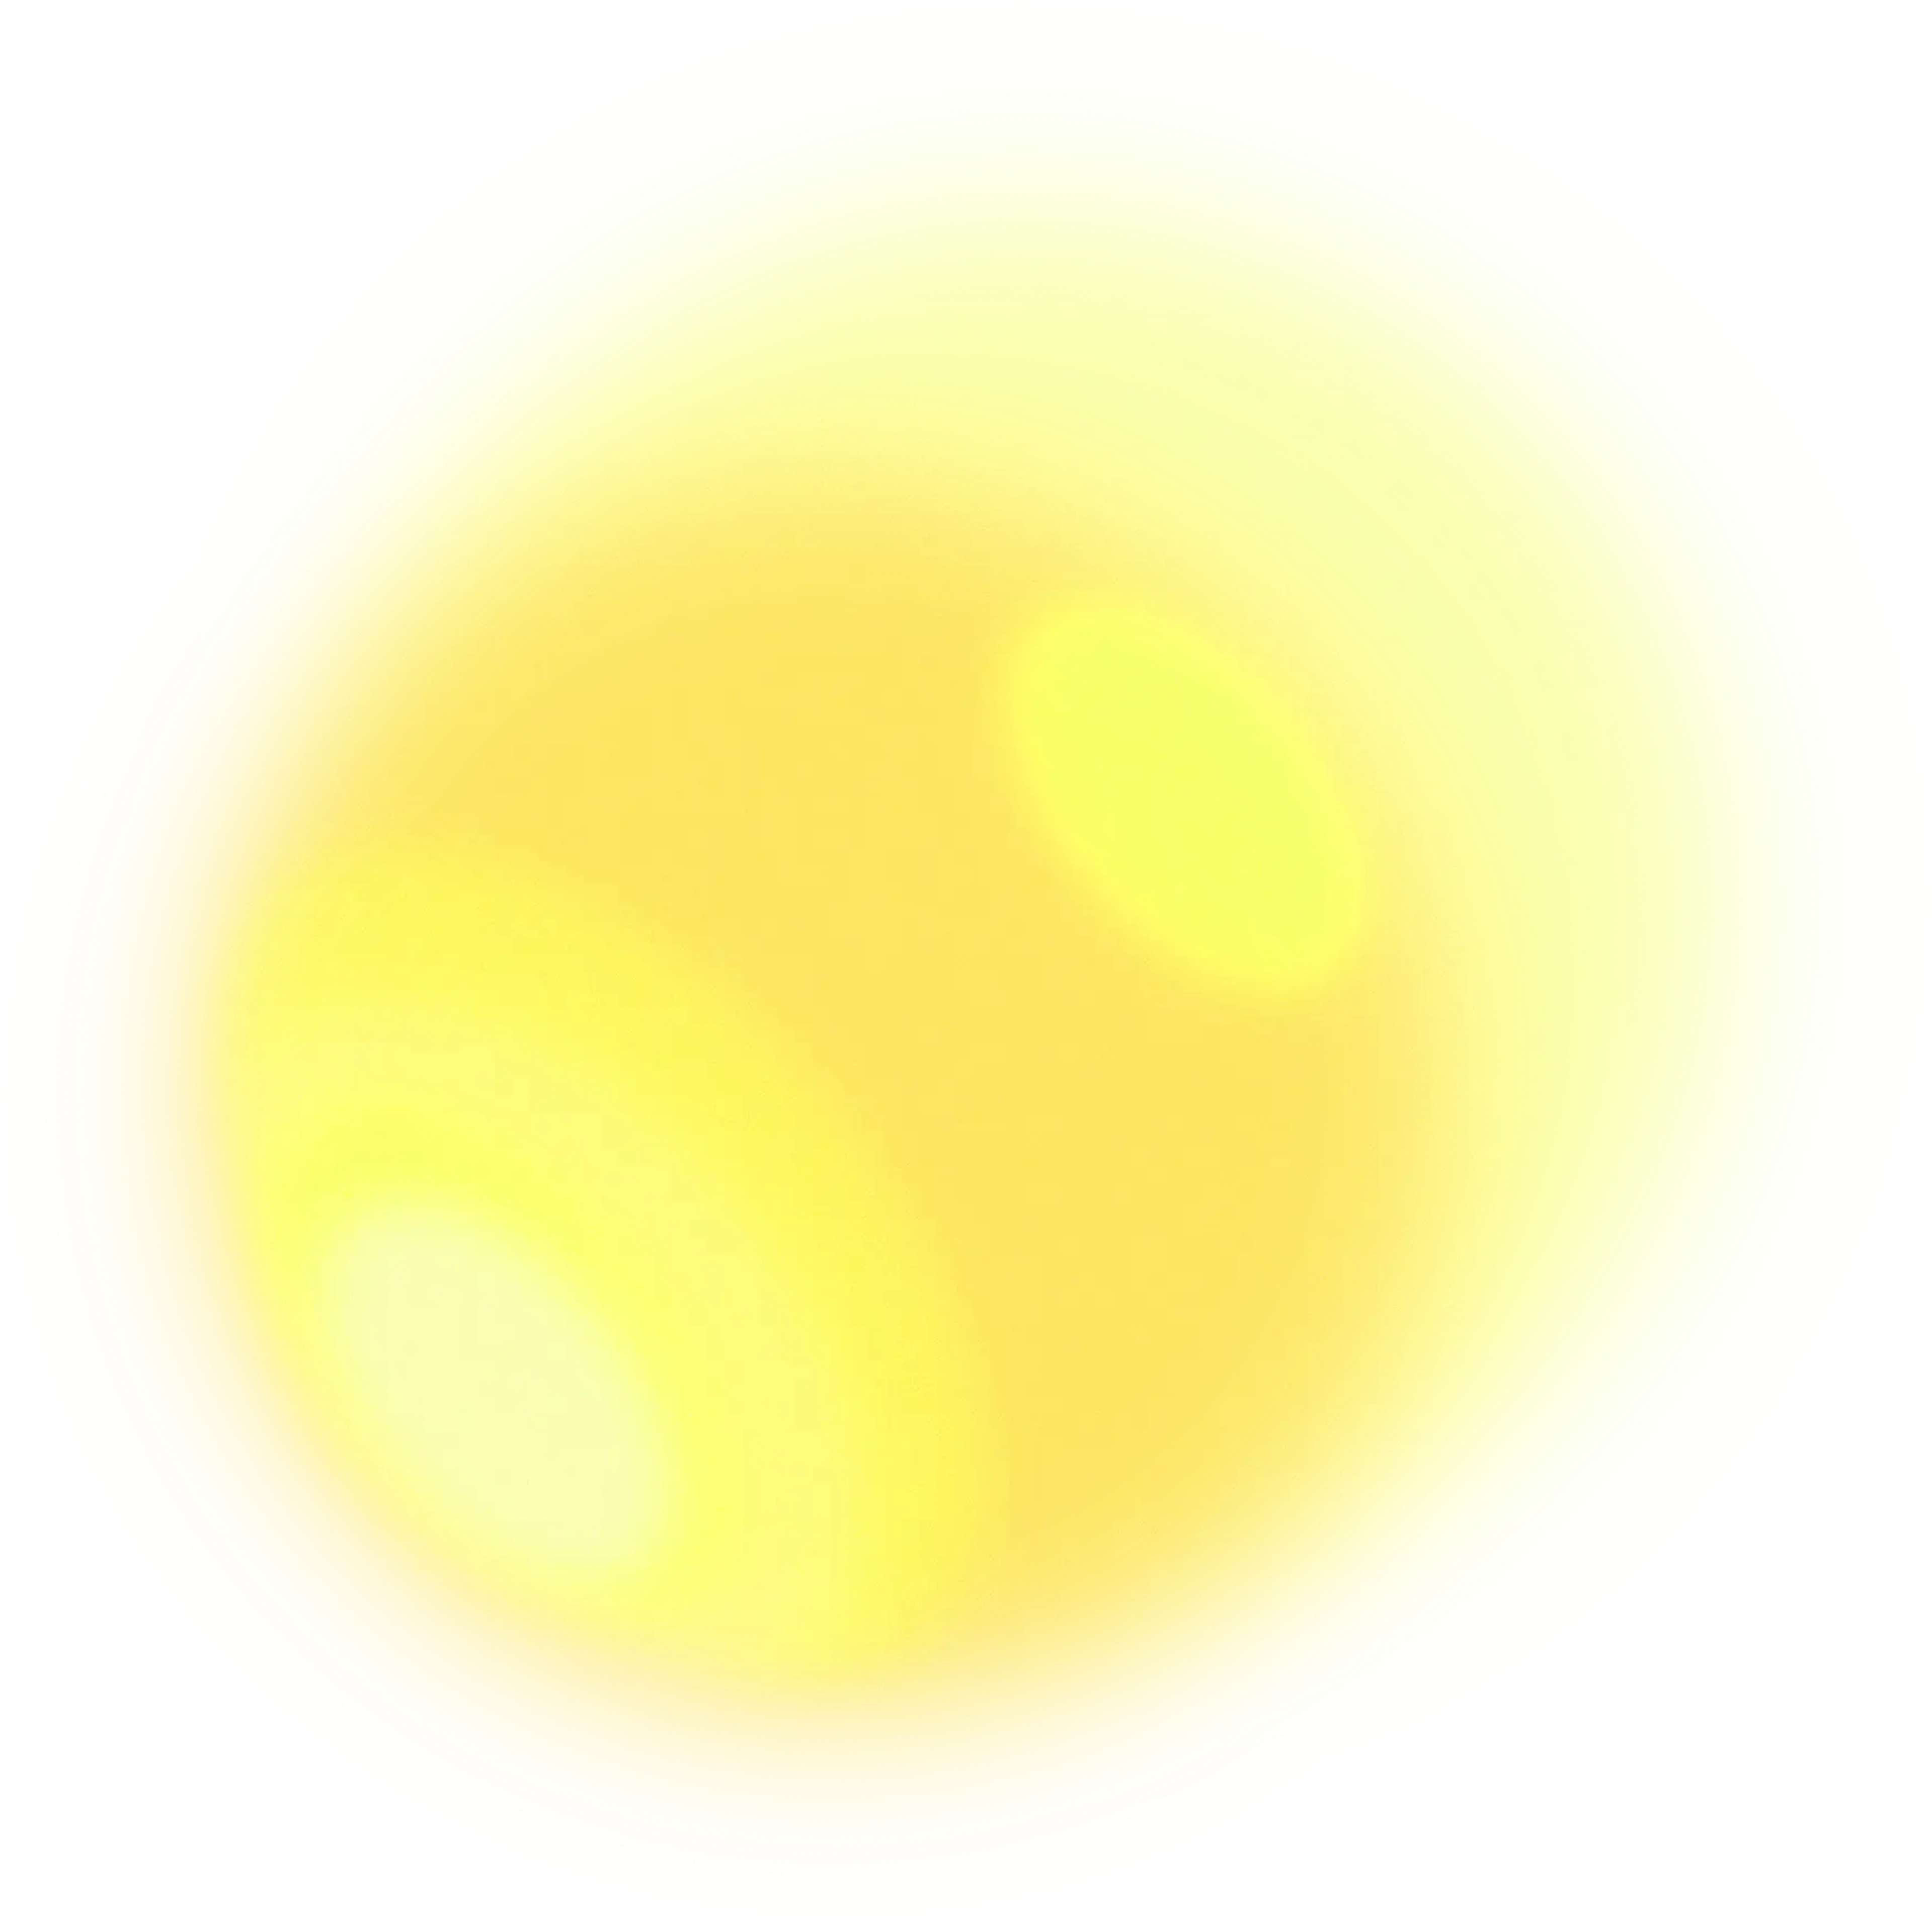 blured sphere